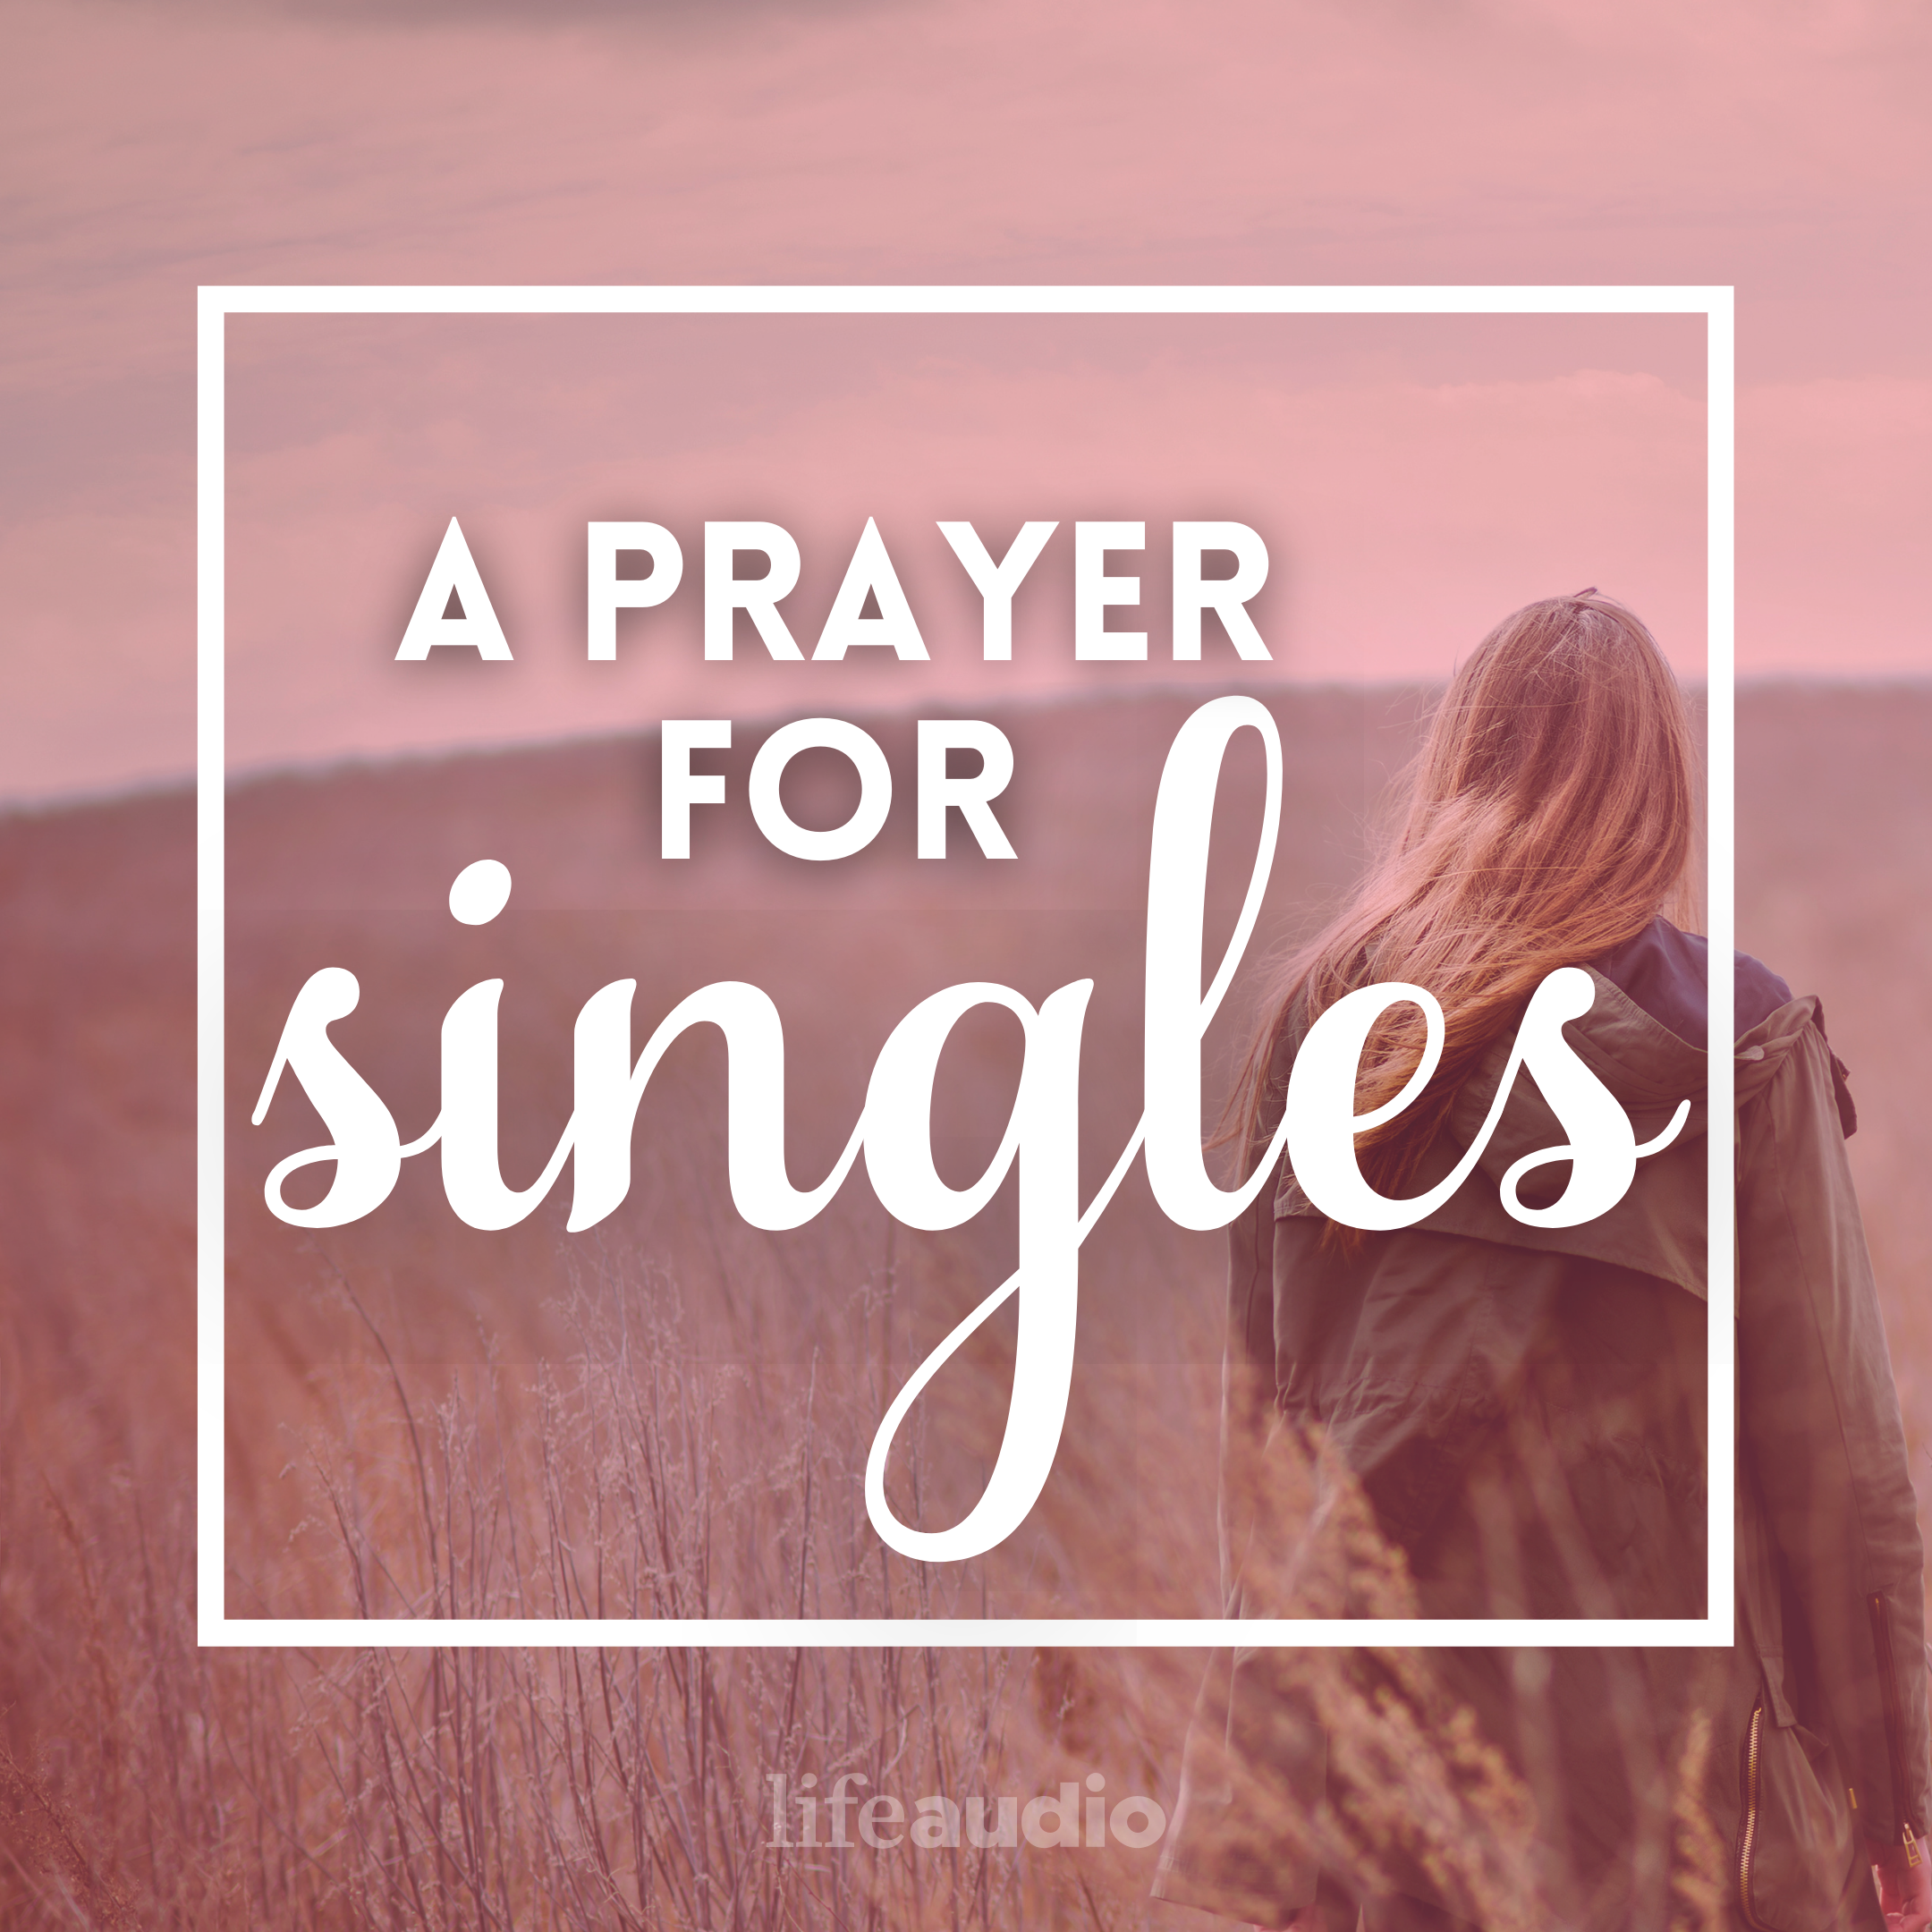 A Prayer for Singles